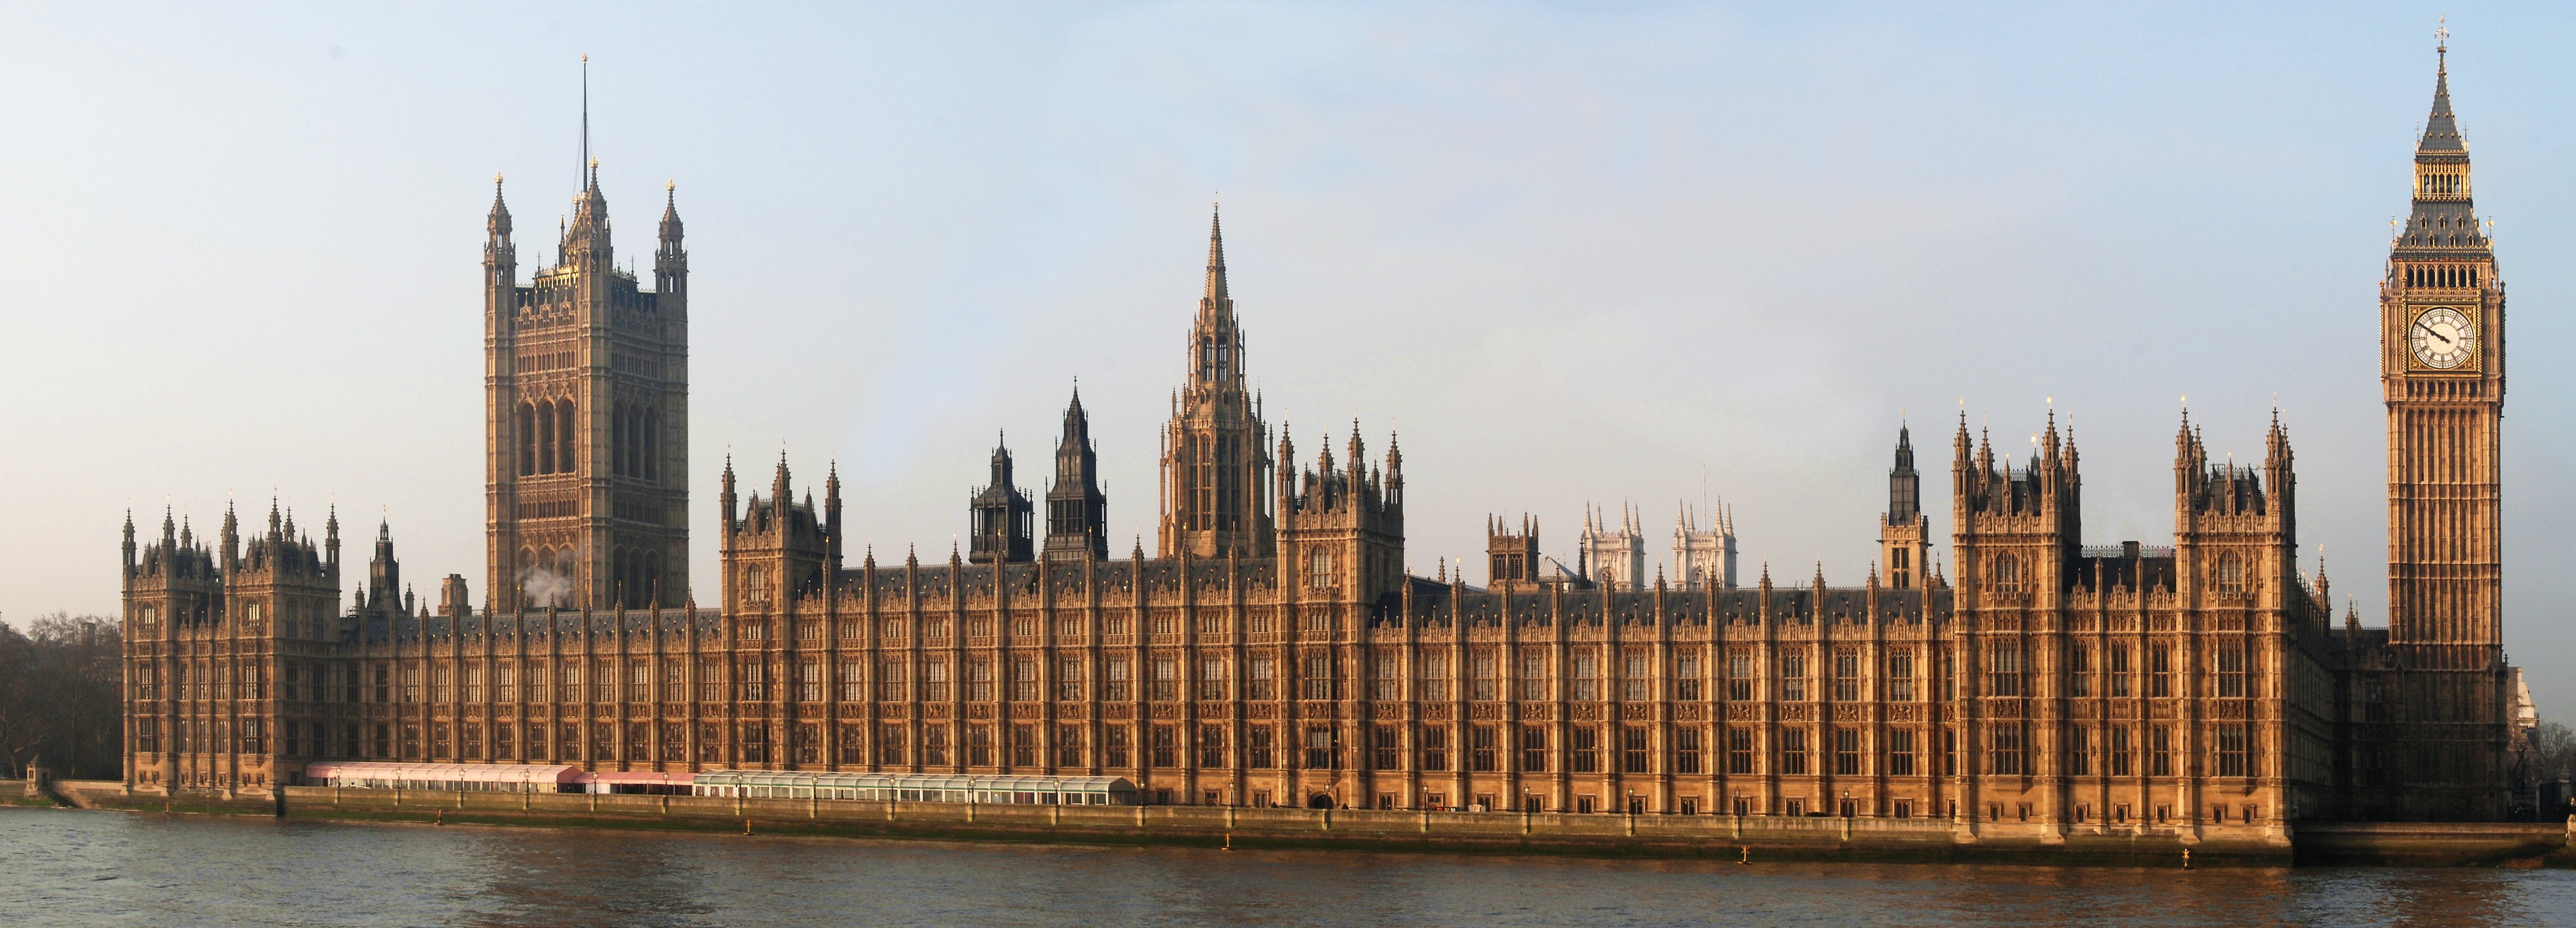 File:London Parliament 2007-1.jpg - Wikimedia Commons